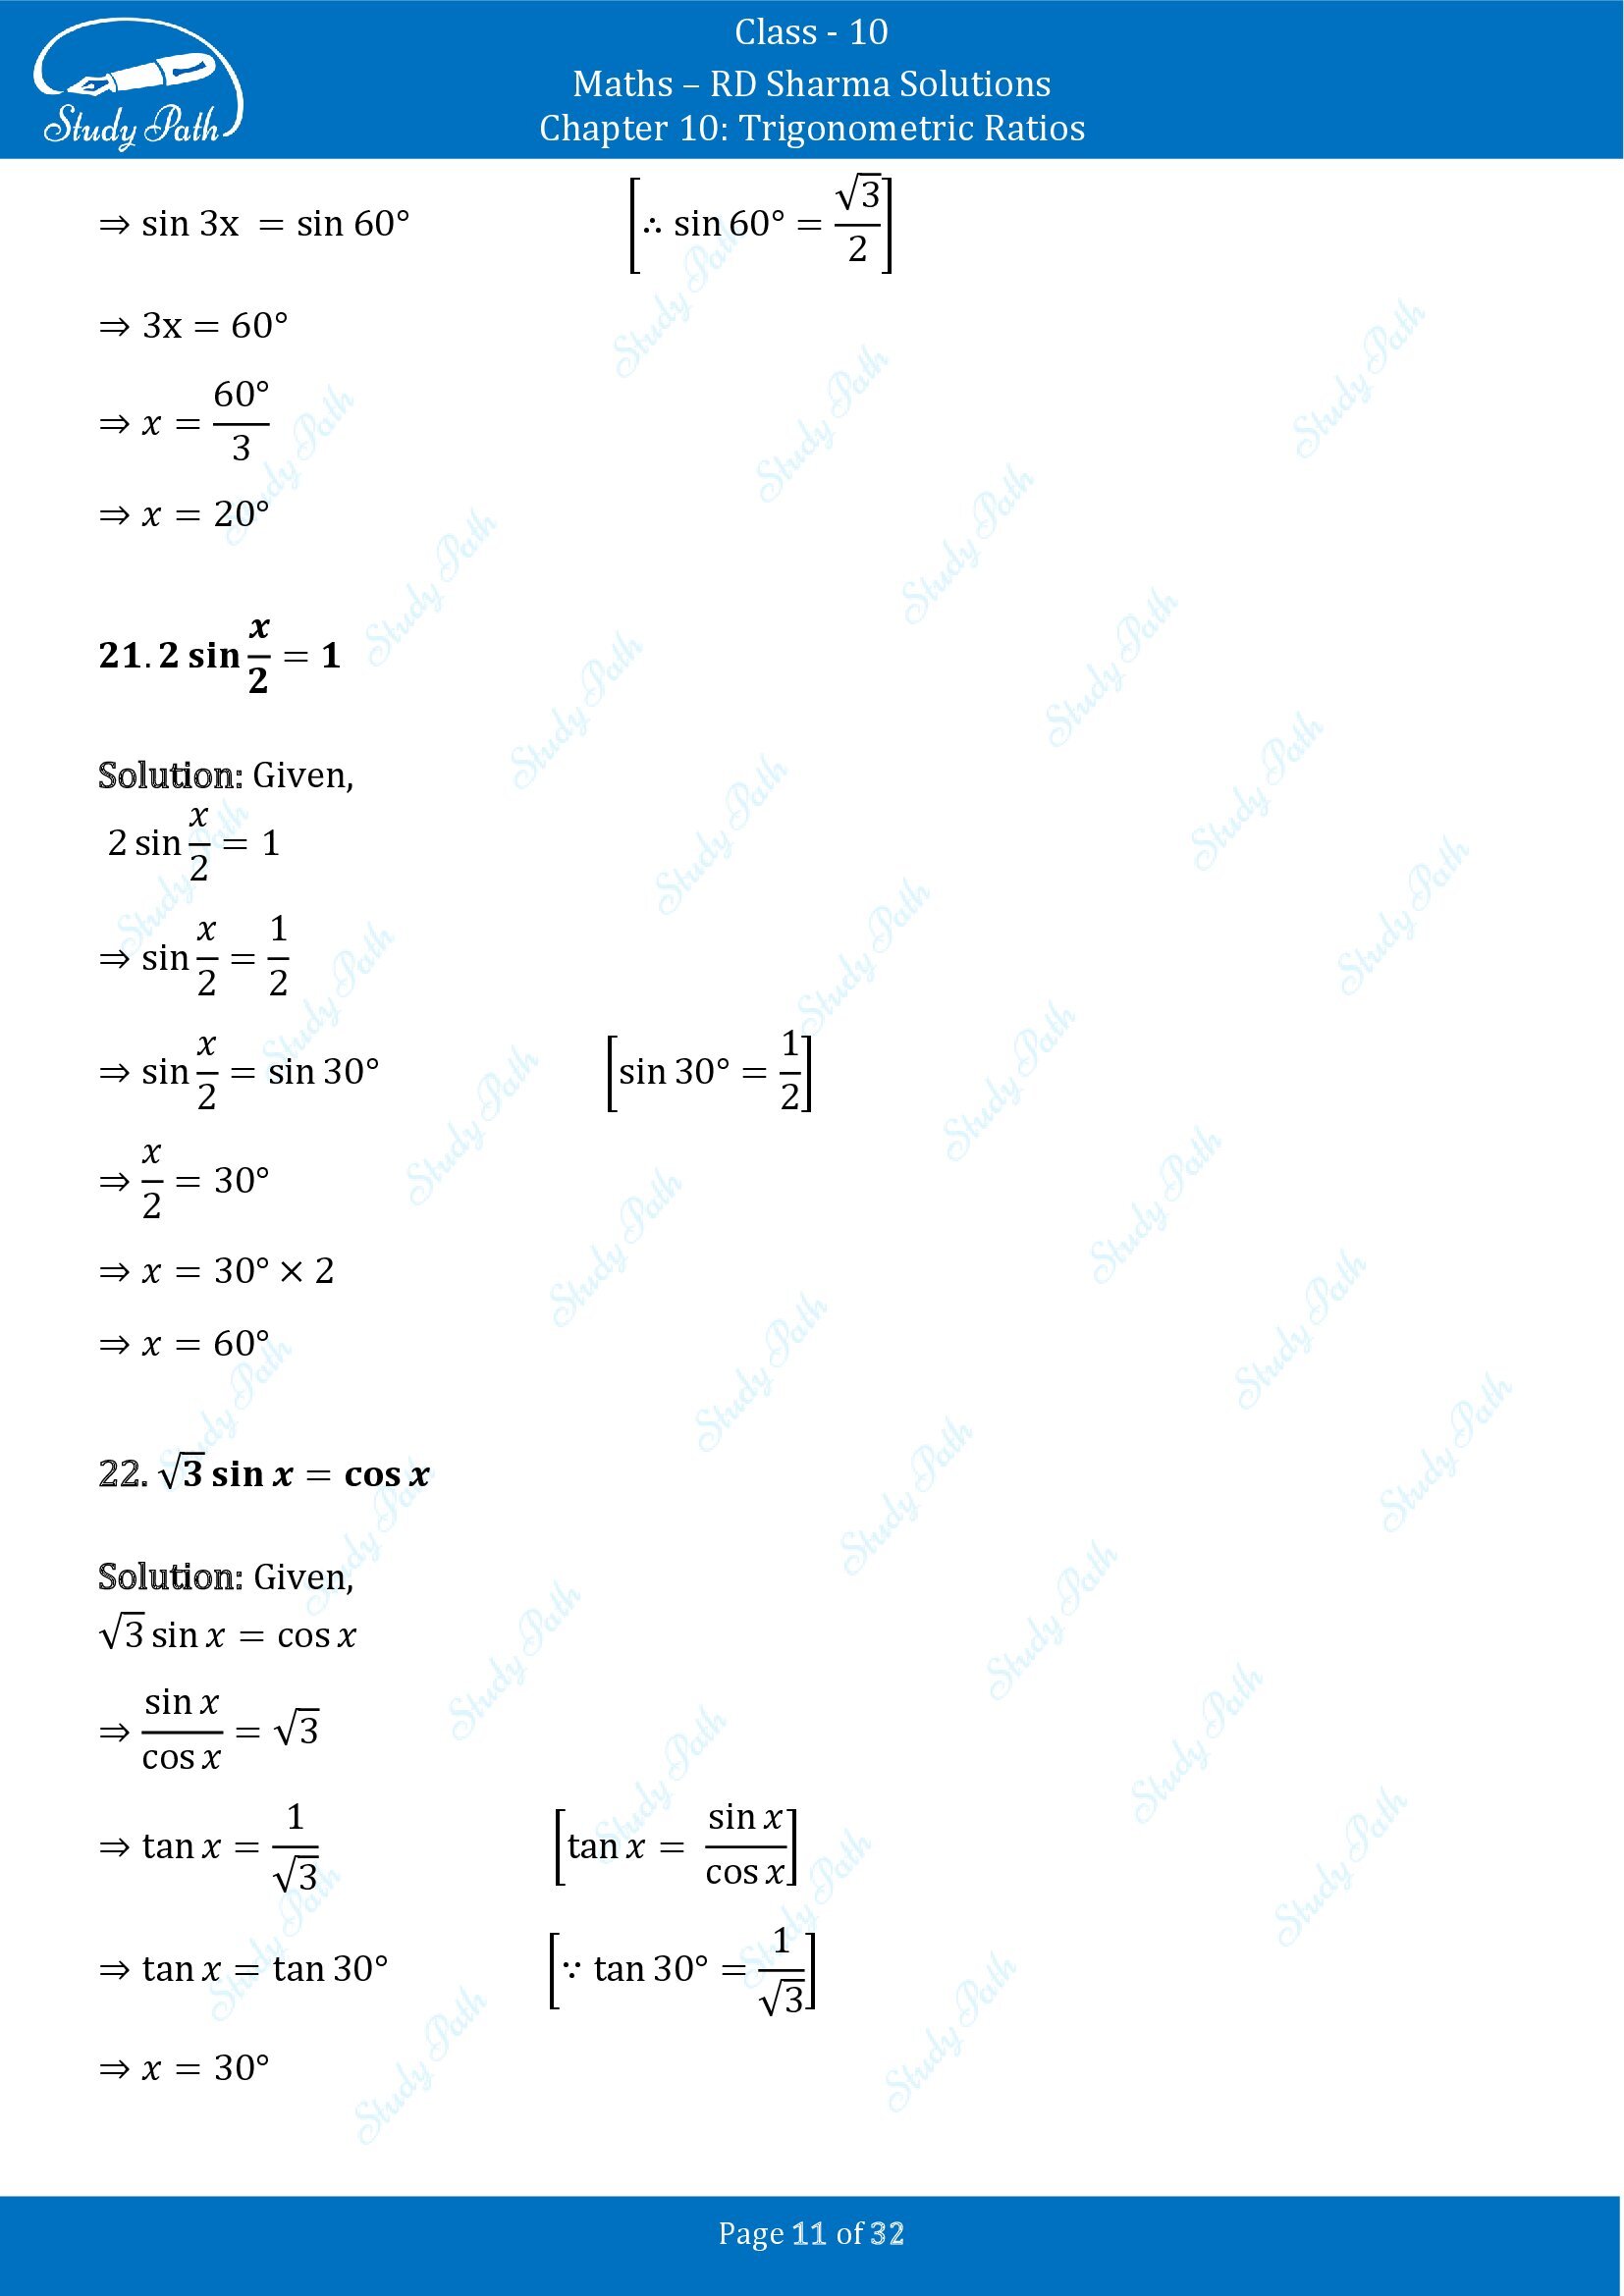 RD Sharma Solutions Class 10 Chapter 10 Trigonometric Ratios Exercise 10.2 00011